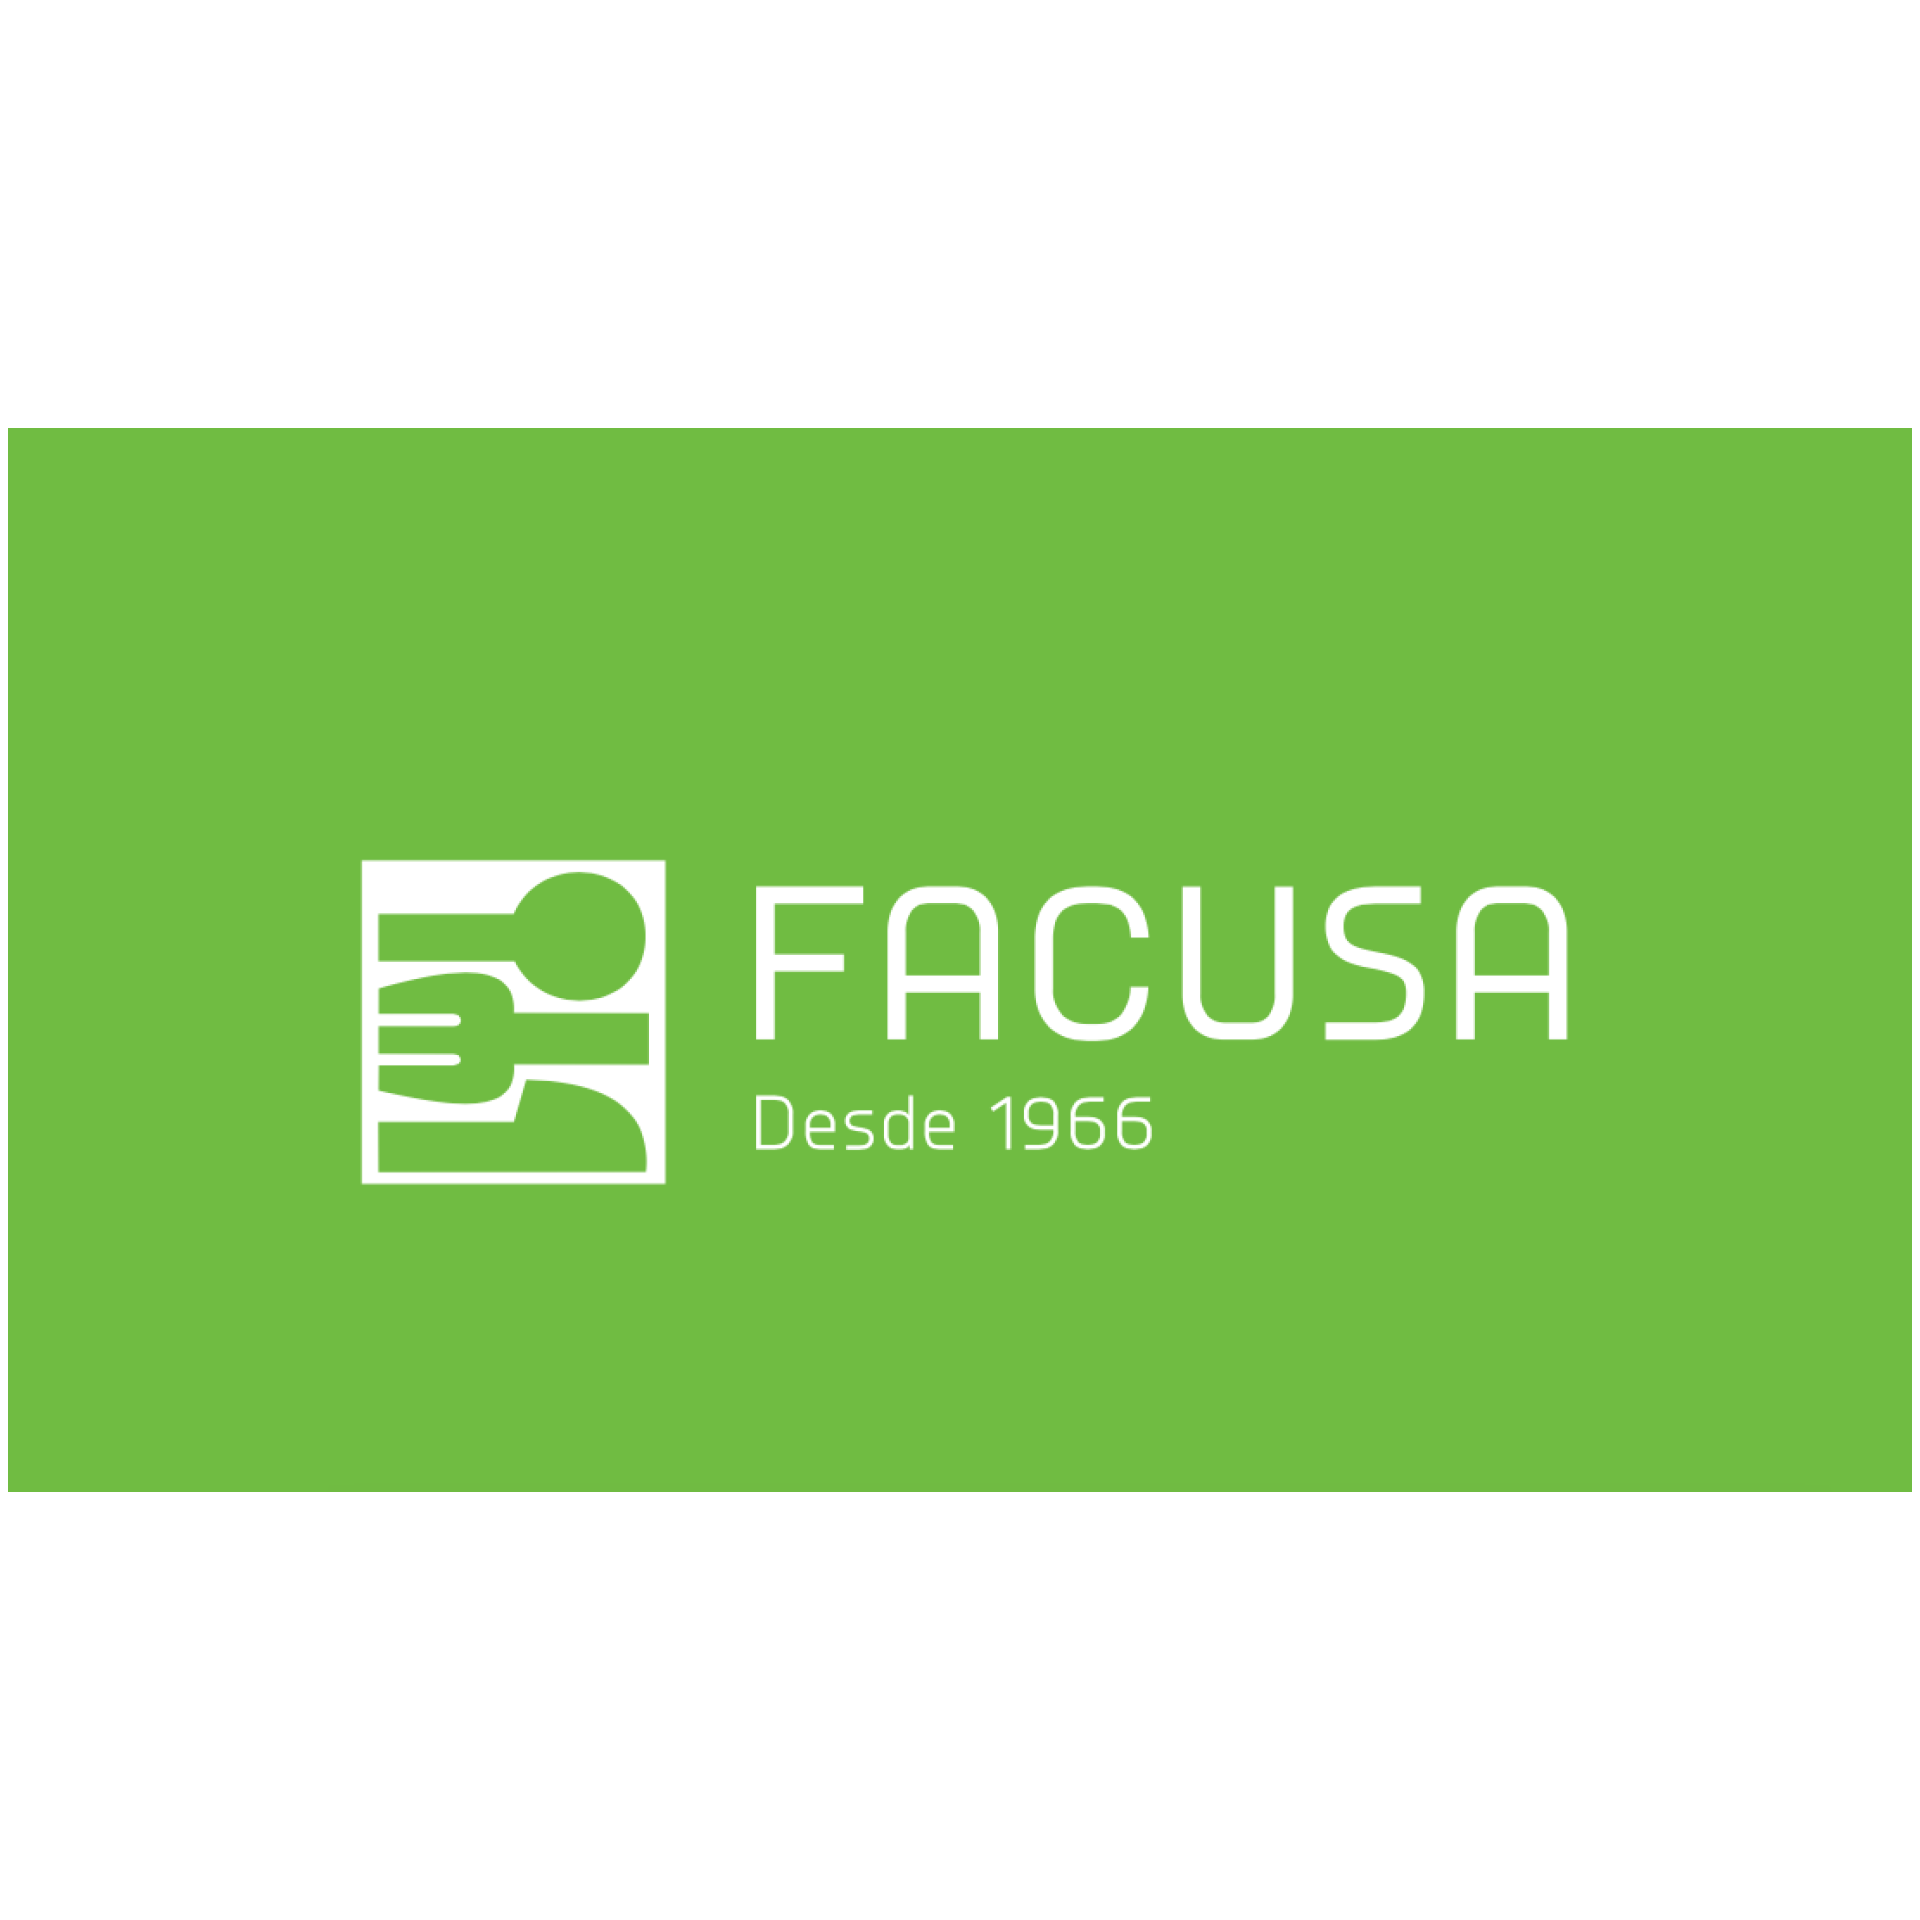 Facusa | Set de frascos colors Push